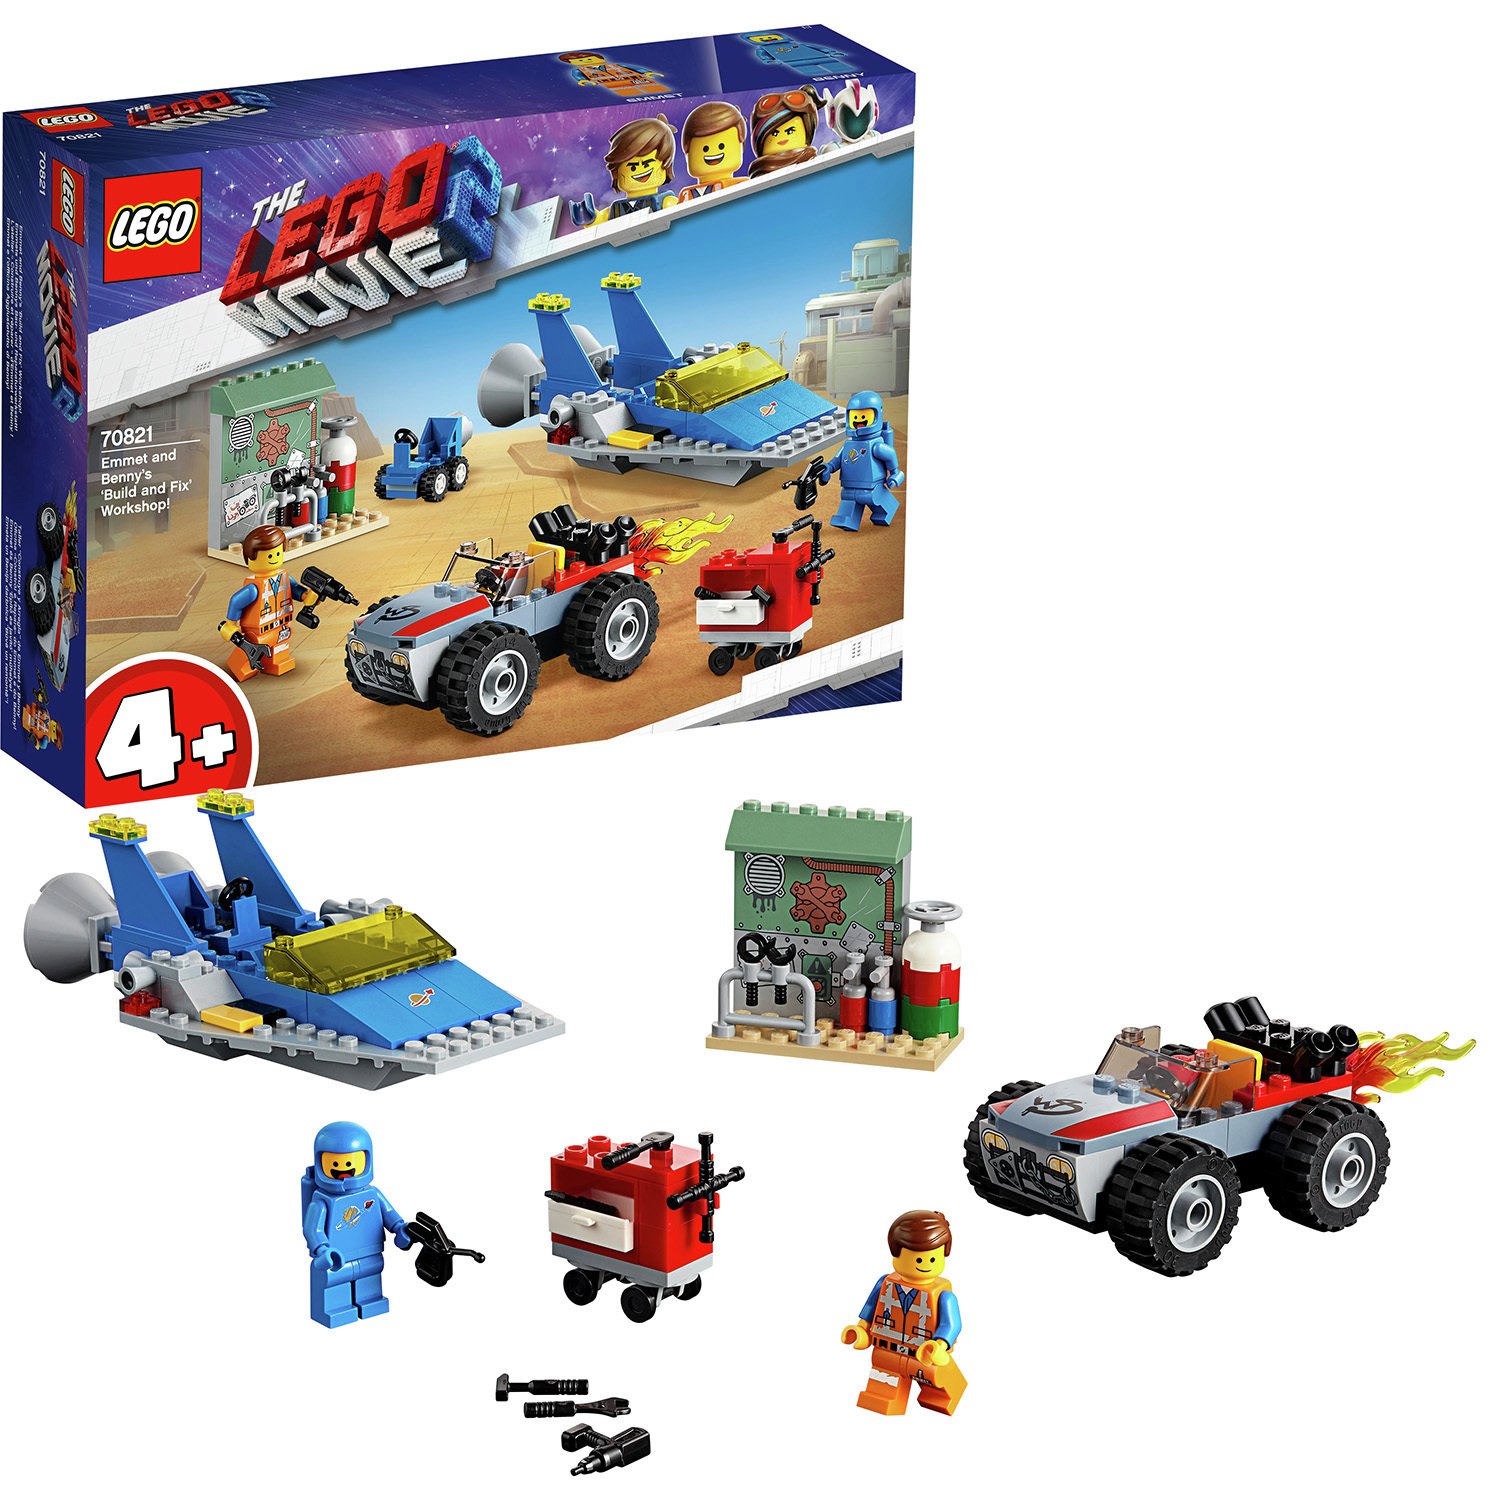 LEGO Movie 2 Emmet & Benny's Workshop Toy Vehicles - 70821